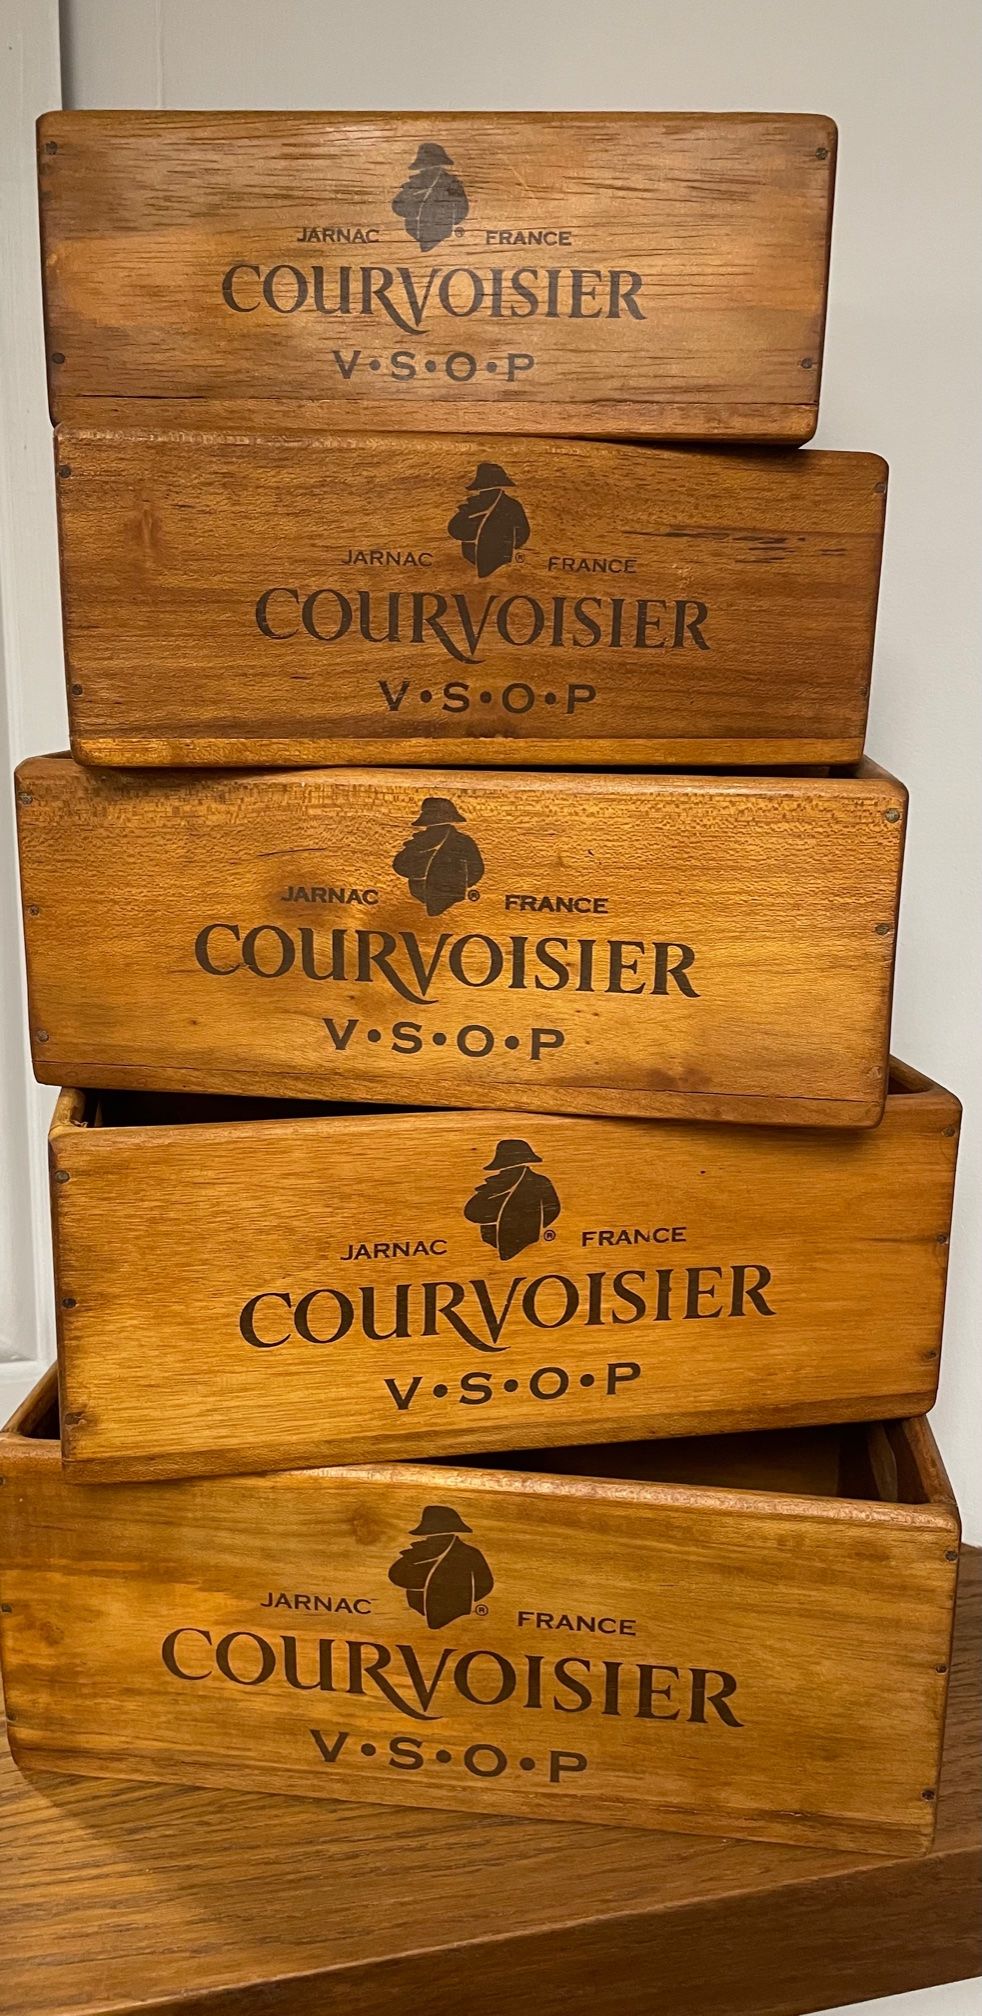 Wooden Boxes - 5 Sizes - Courvoisier